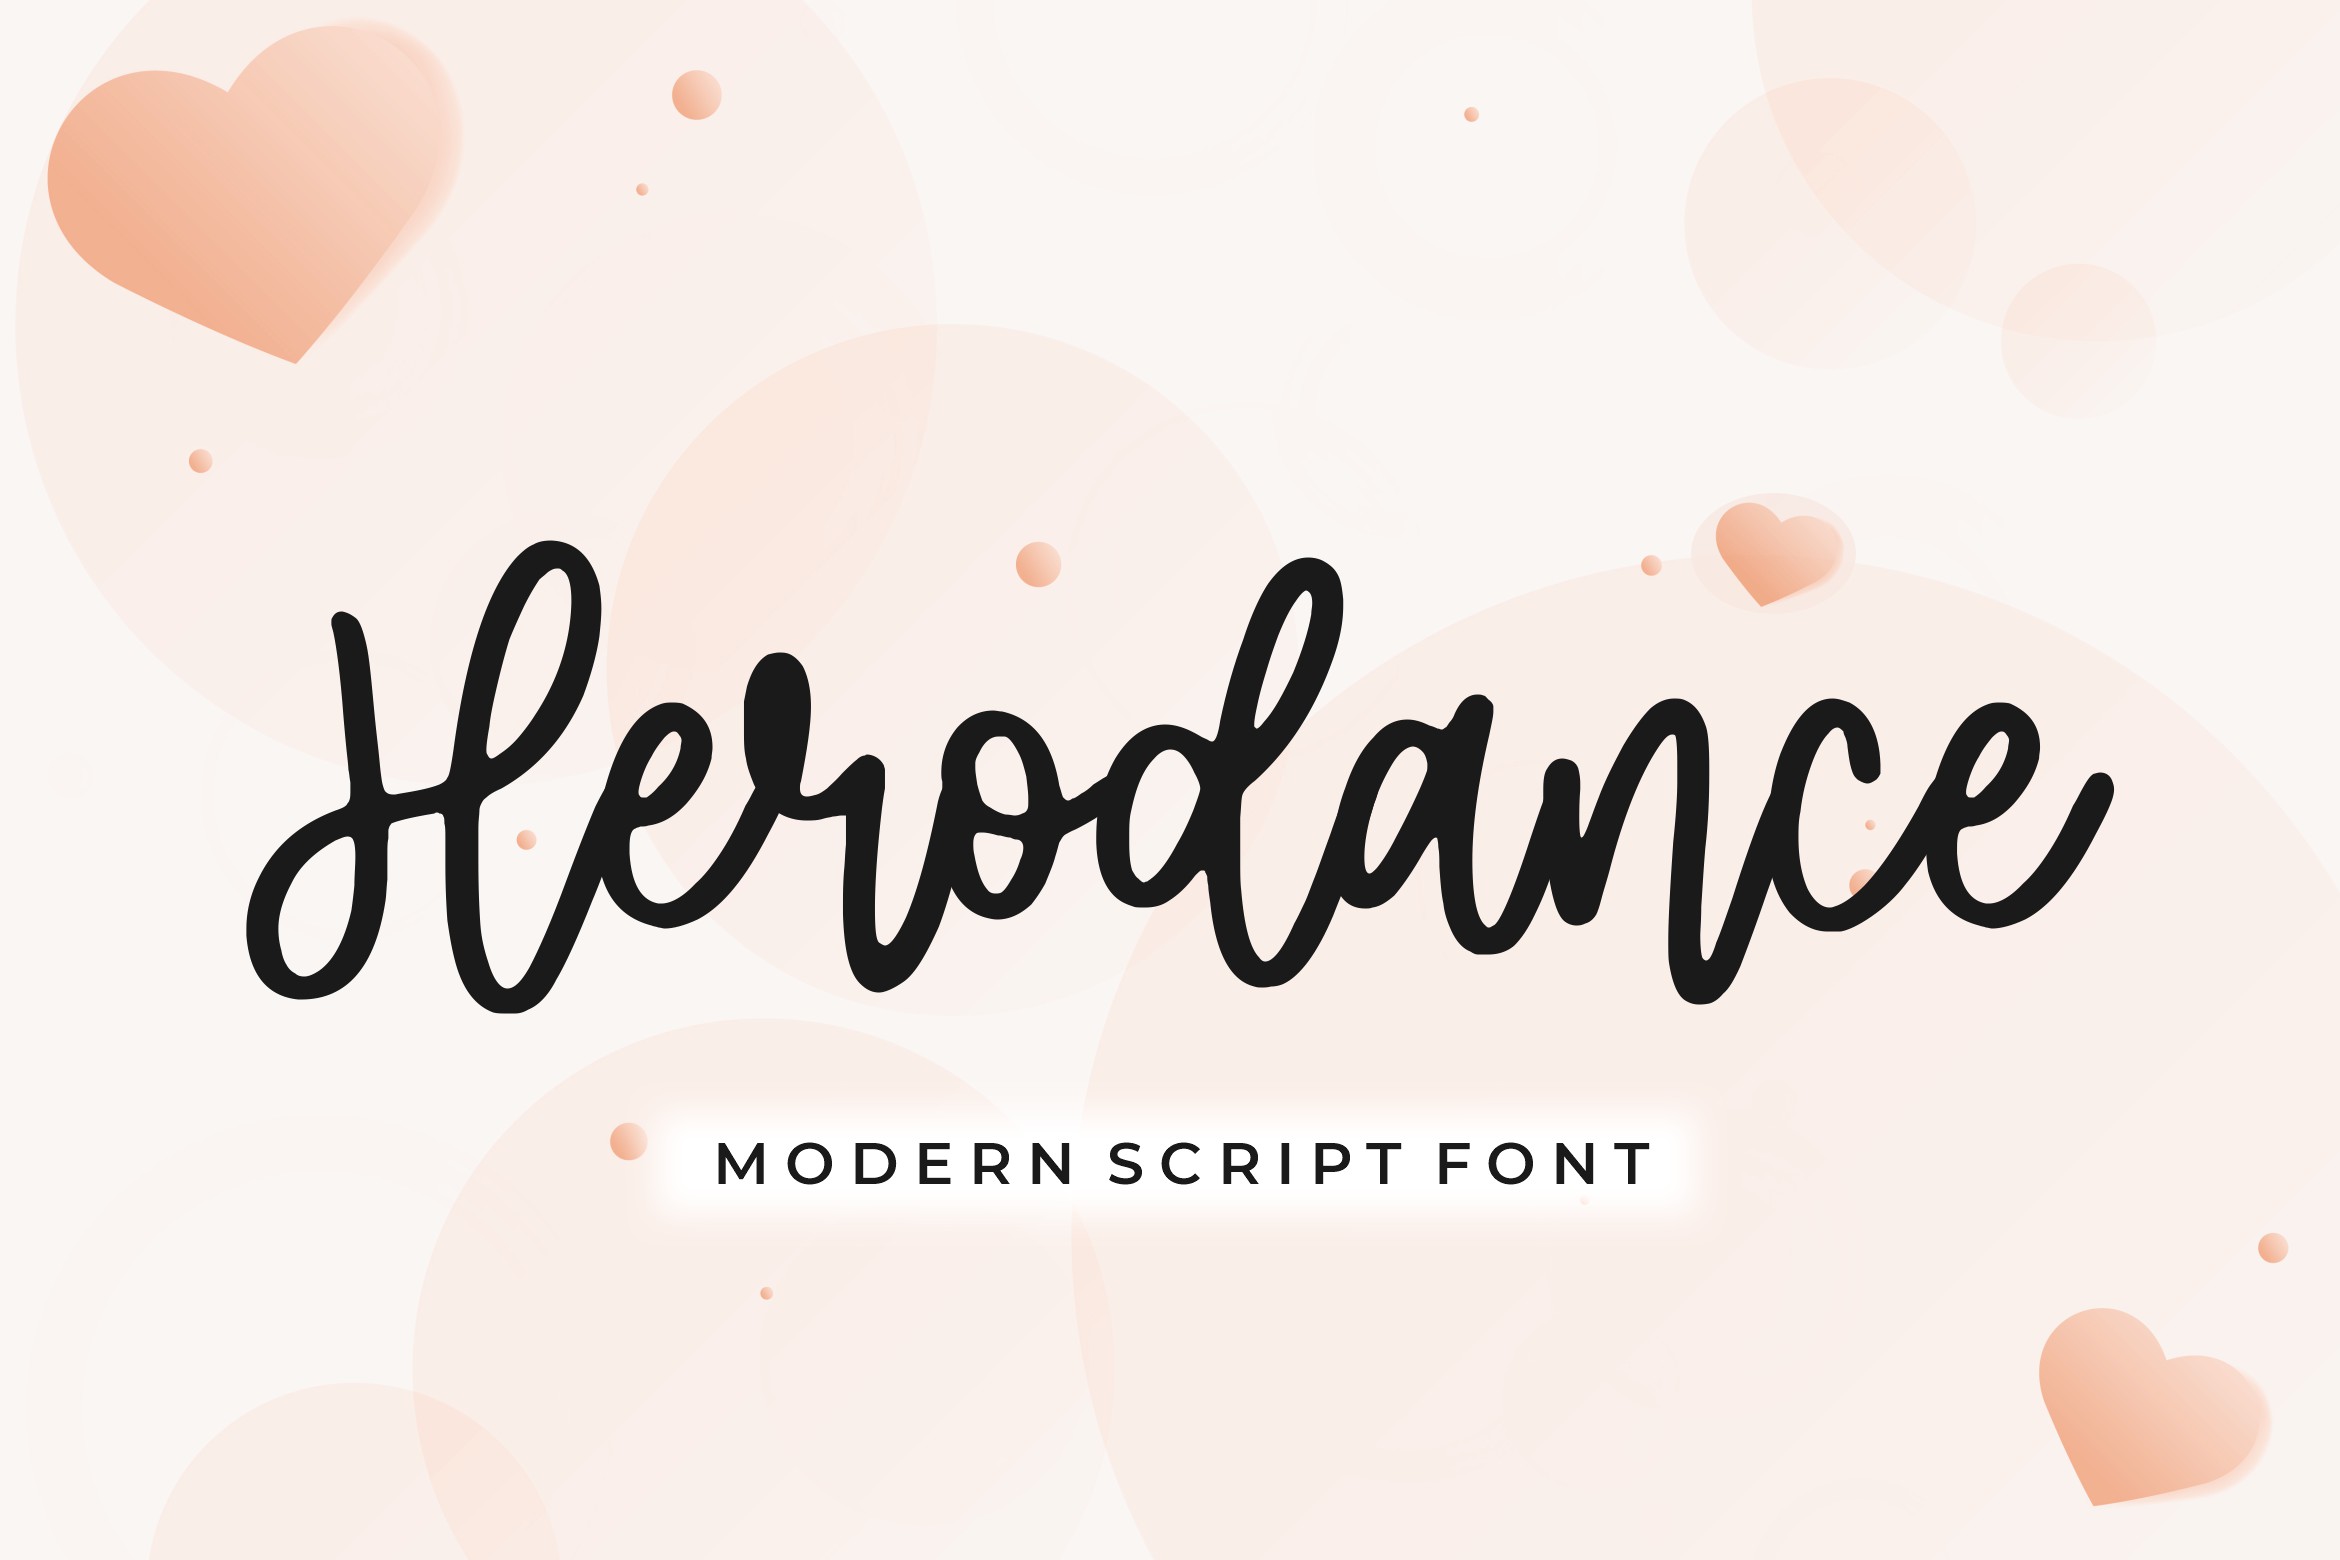 Herodance Script Font